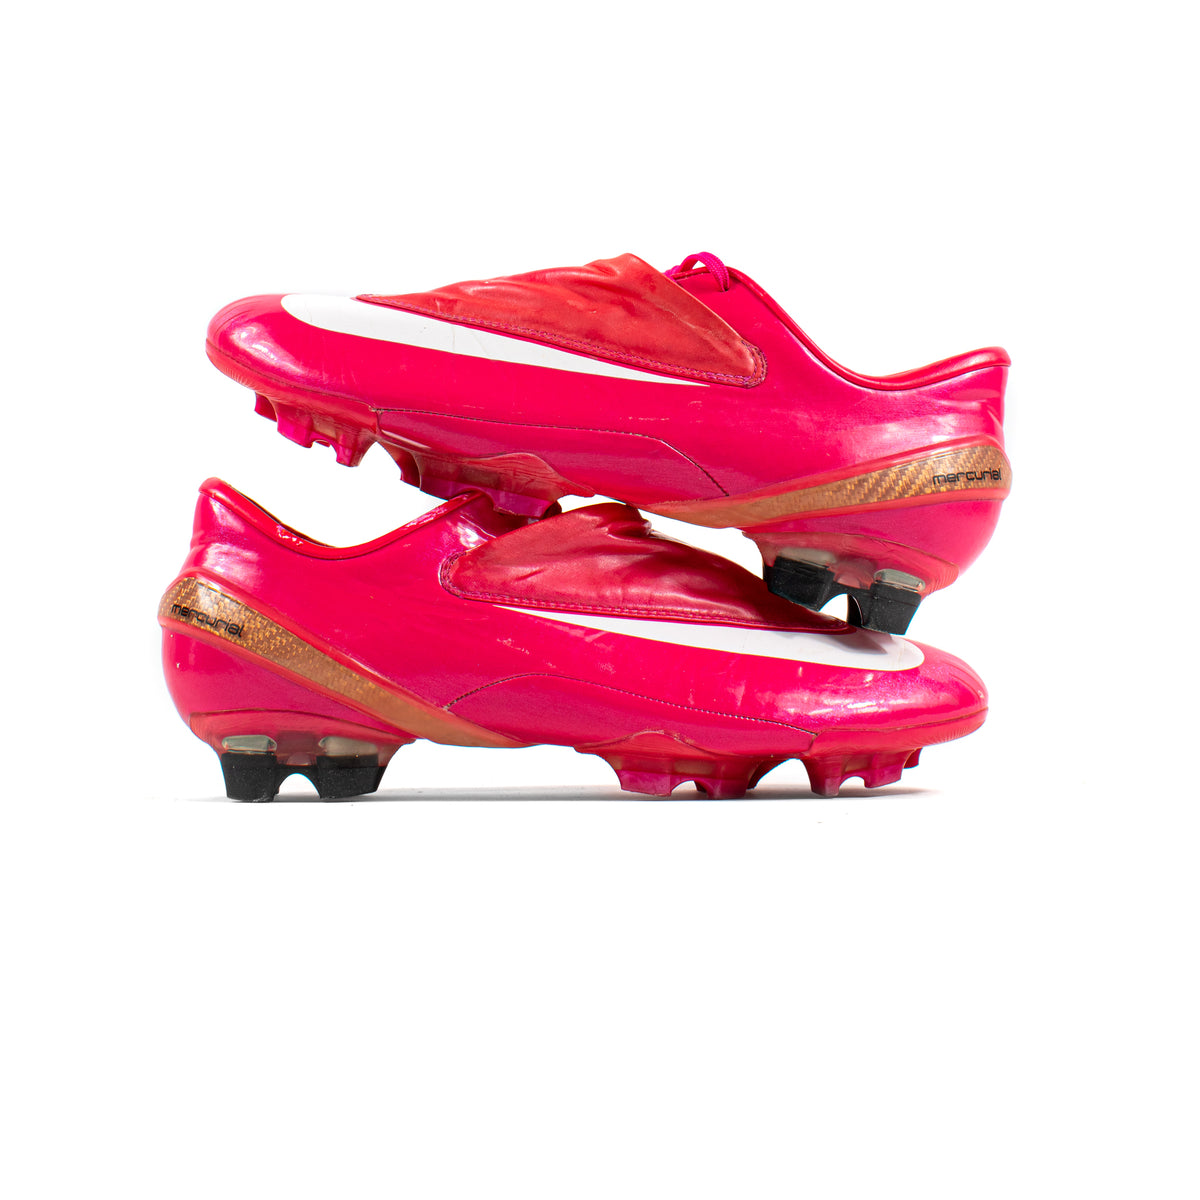 Digital dar a entender mensual Nike Mercurial Vapor IV Berry Rosa FG – Classic Soccer Cleats